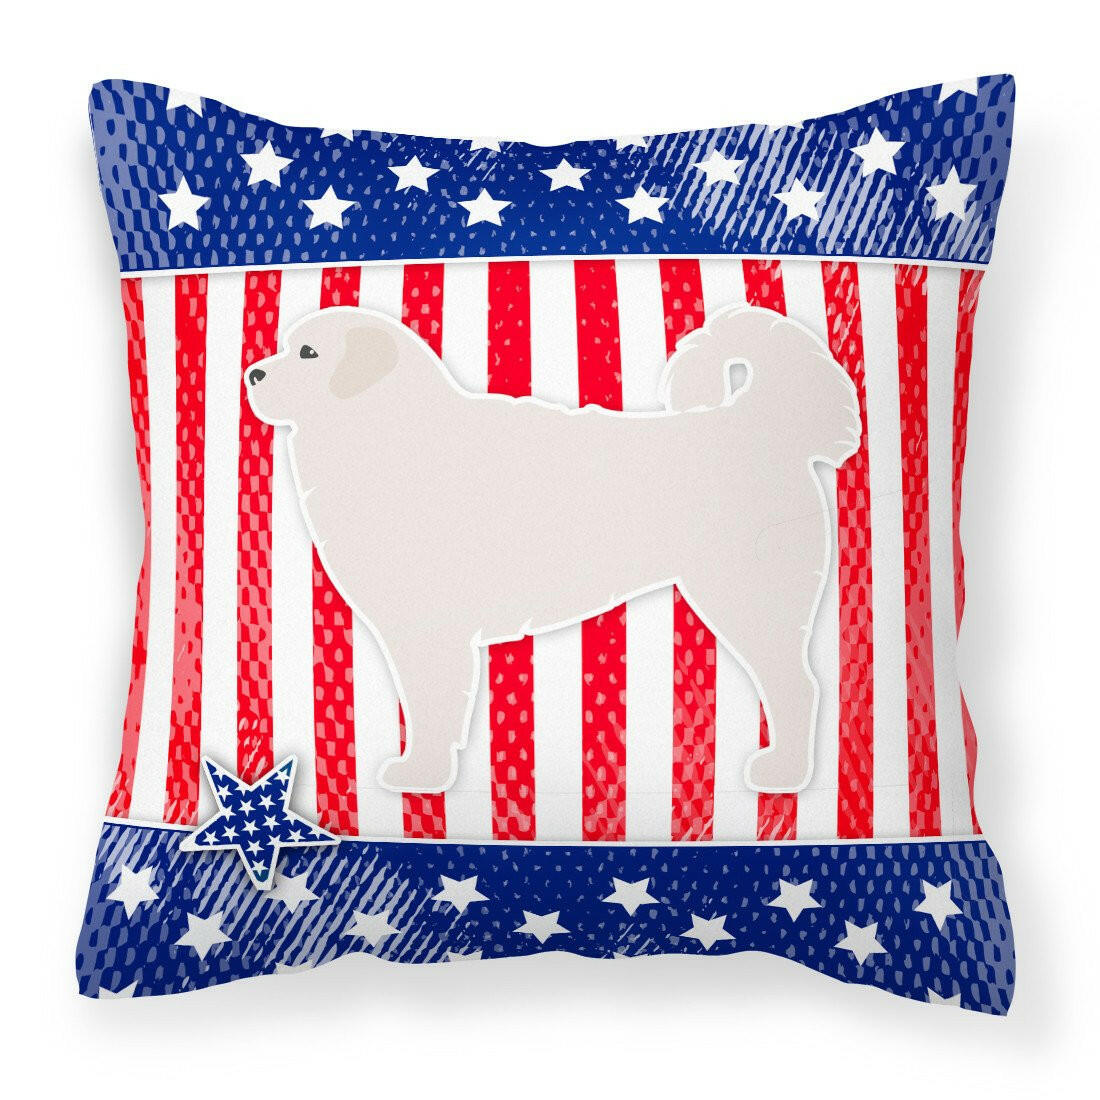 USA Patriotic Polish Tatra Sheepdog Fabric Decorative Pillow BB3327PW1818 by Caroline's Treasures